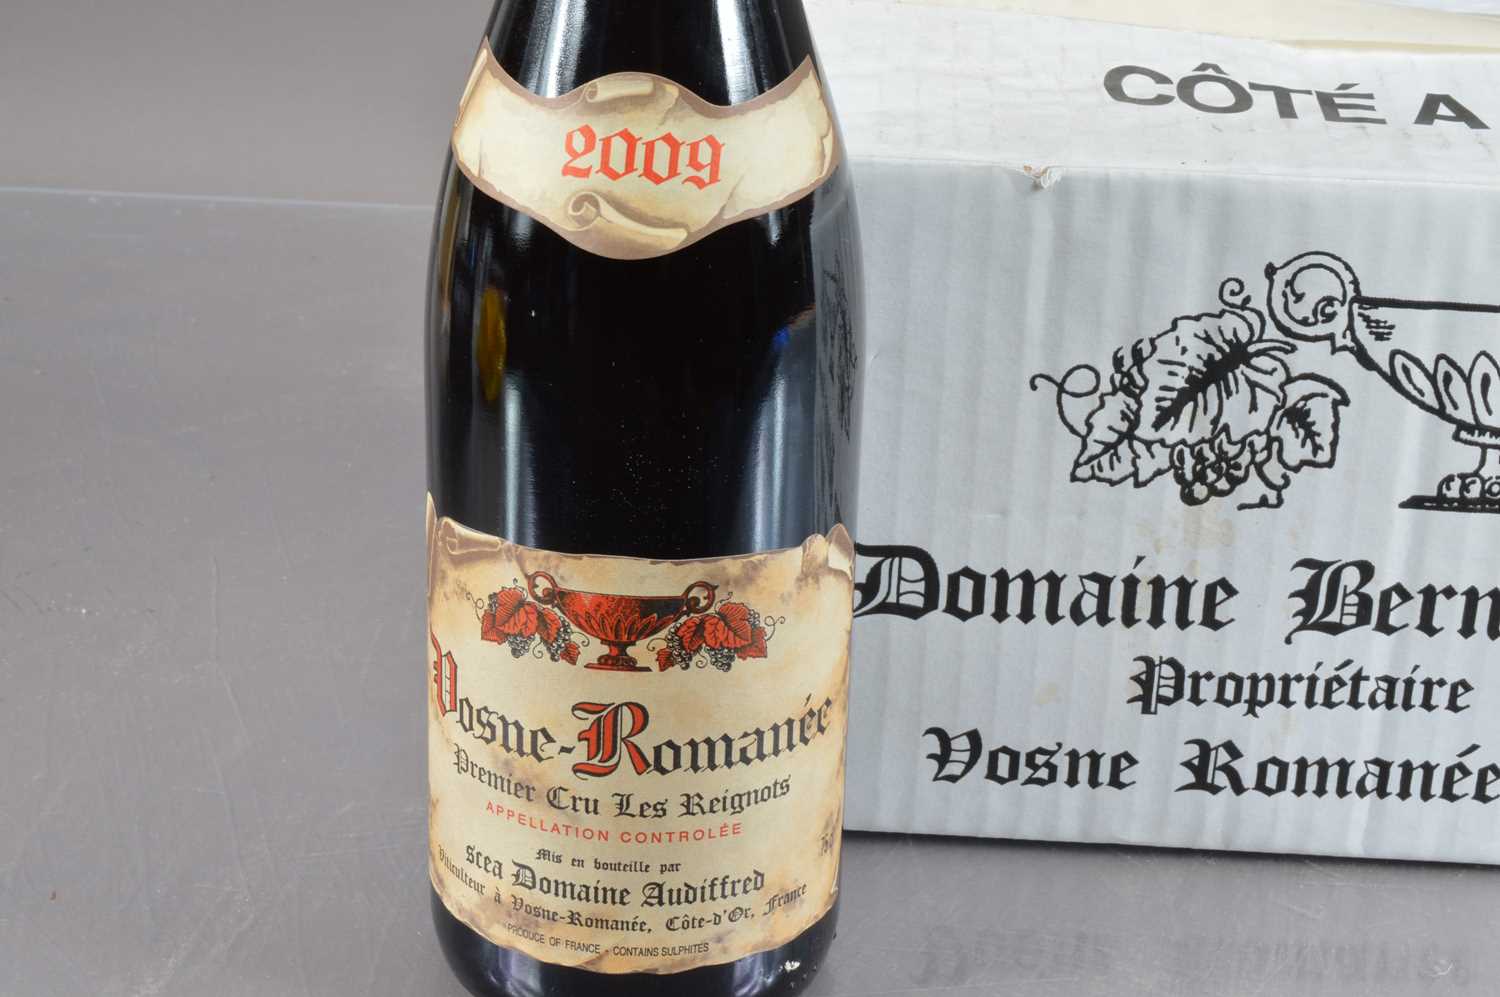 Six bottles of Vosne Romanee 1er Cru 'Les Reignots' 2009, - Image 2 of 2